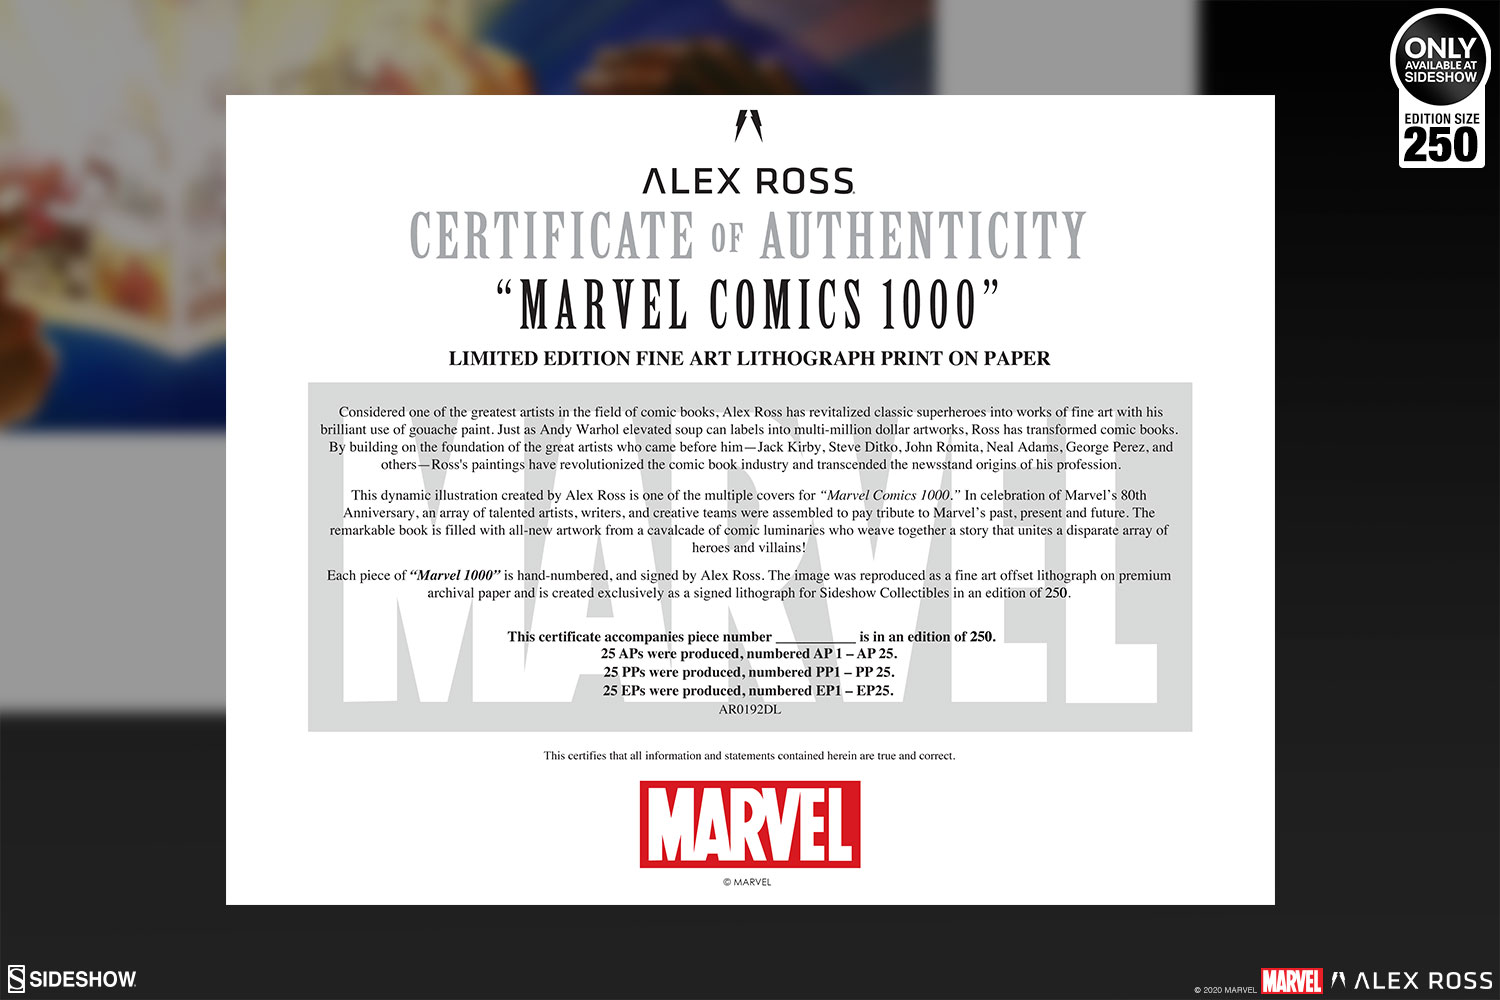 Marvel Comics #1000 Exclusive Edition 